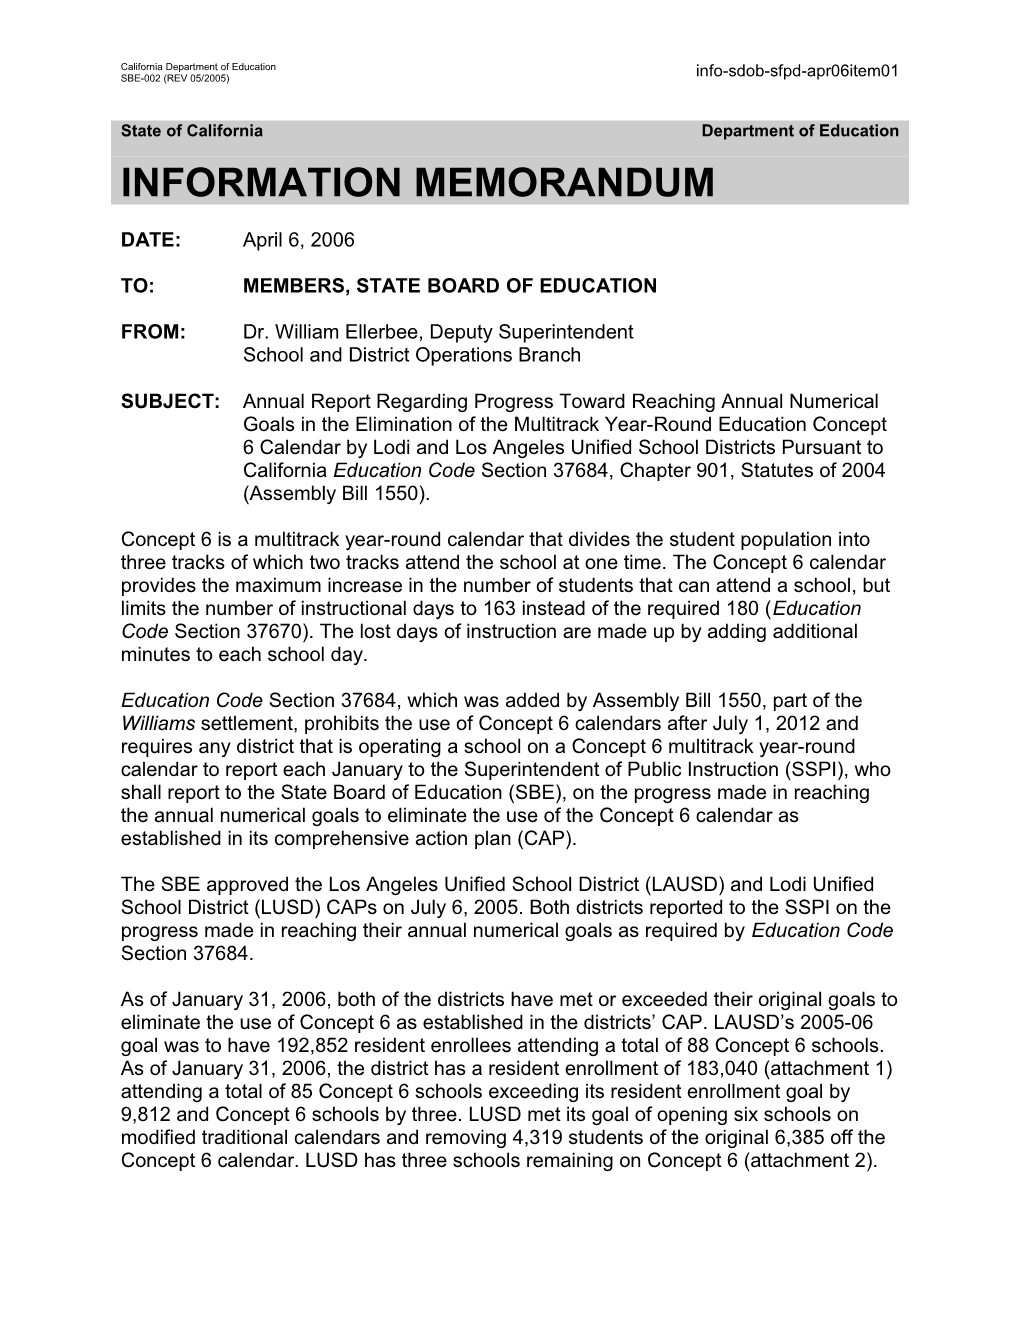 April 2006 SFPD Item 1 - Information Memorandum (CA State Board of Education)